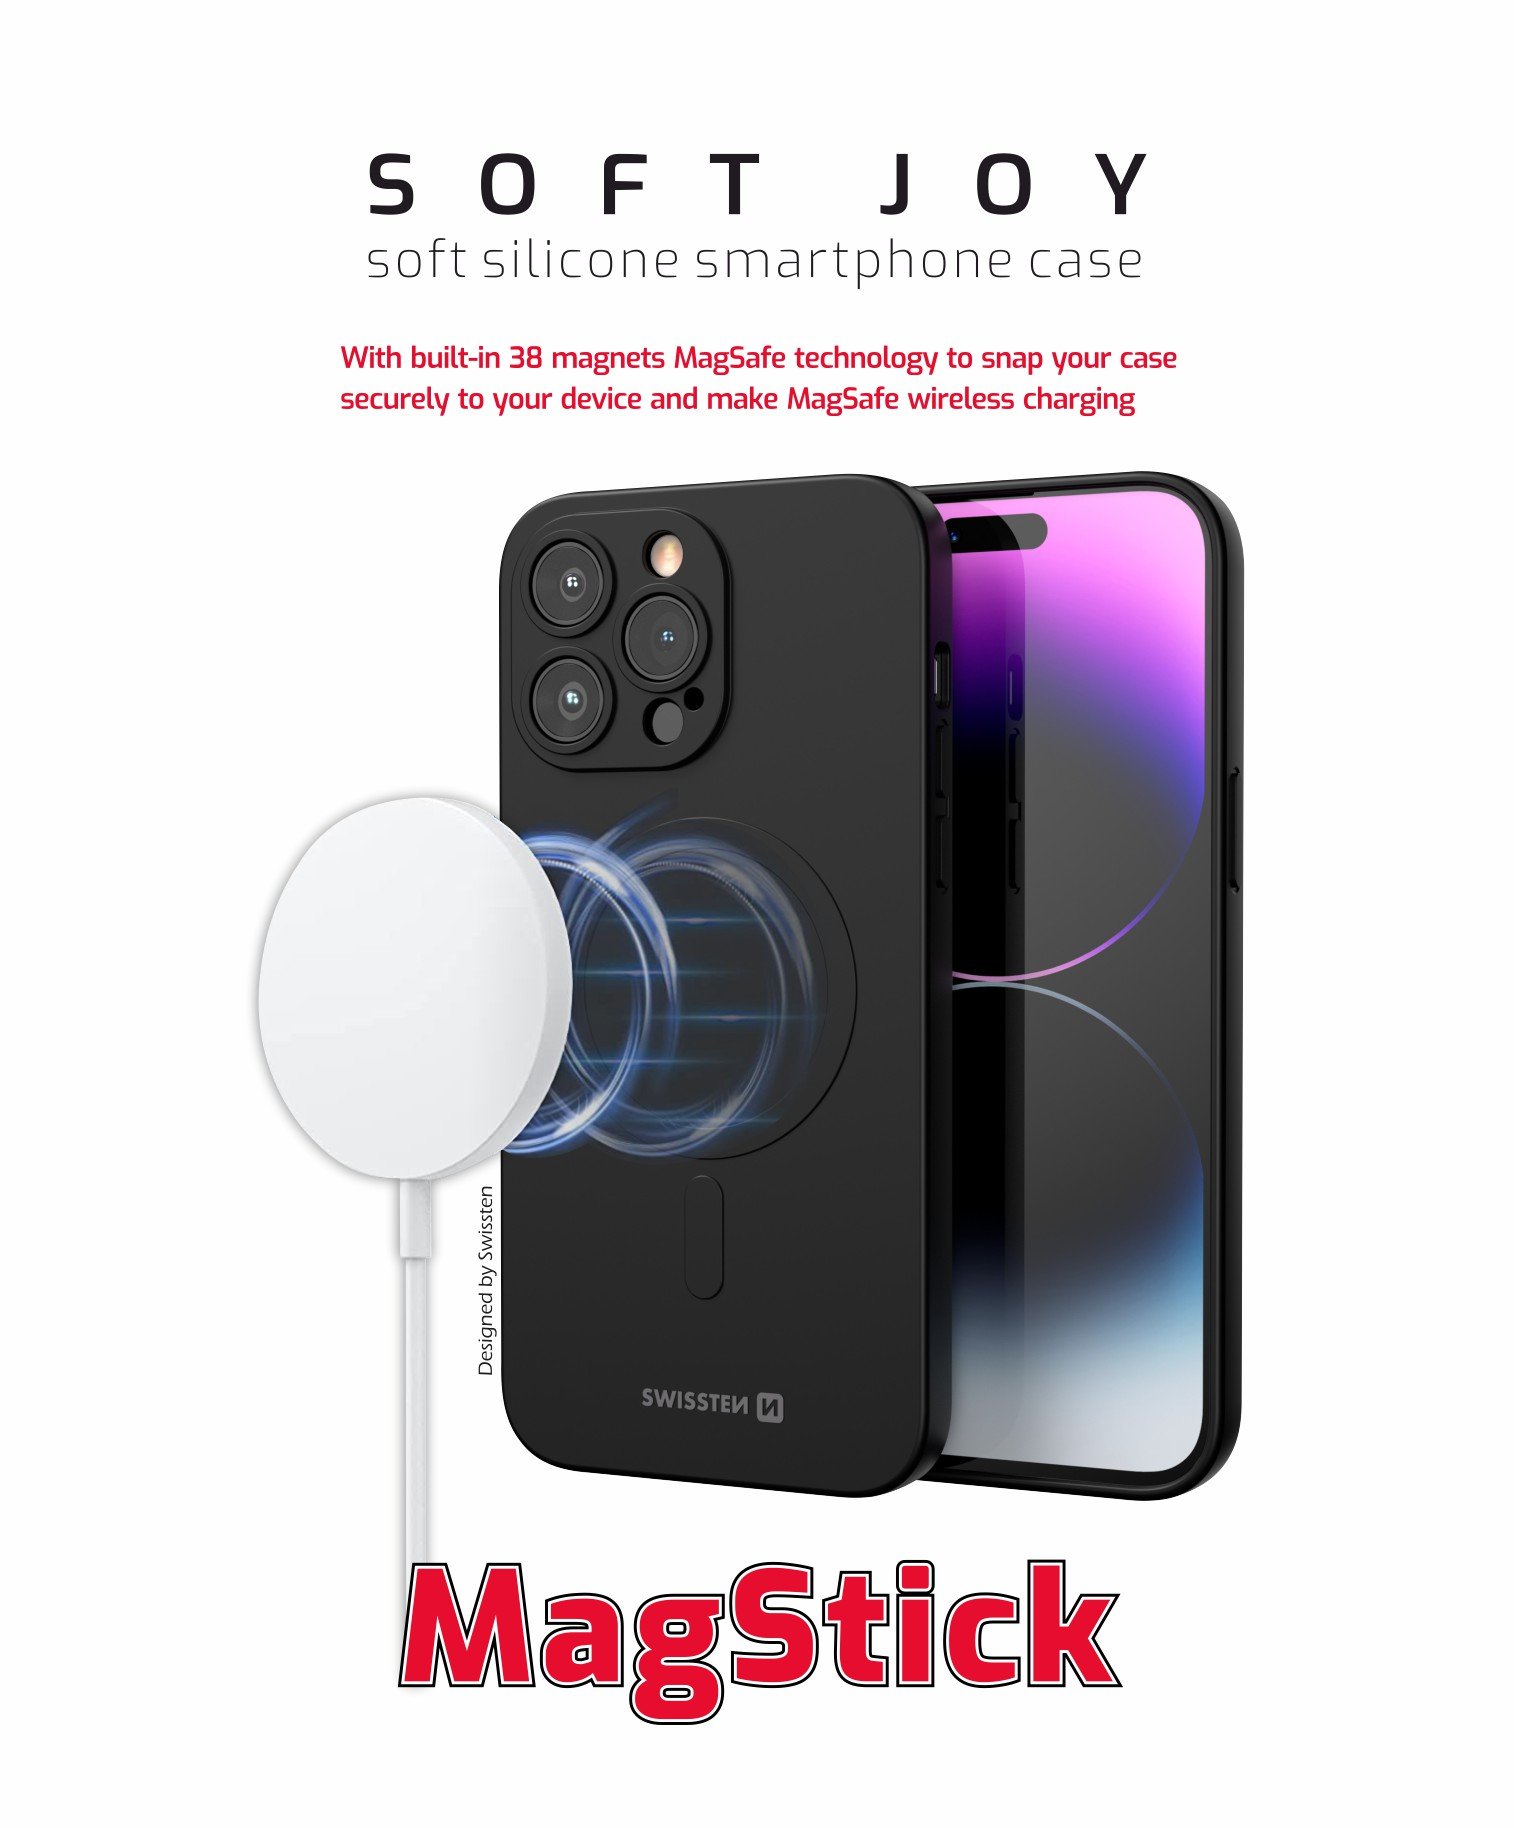 Swissten iPhone 14 Plus Soft Joy Magstick Case - 35500111 - For Magsafe Charging - Black